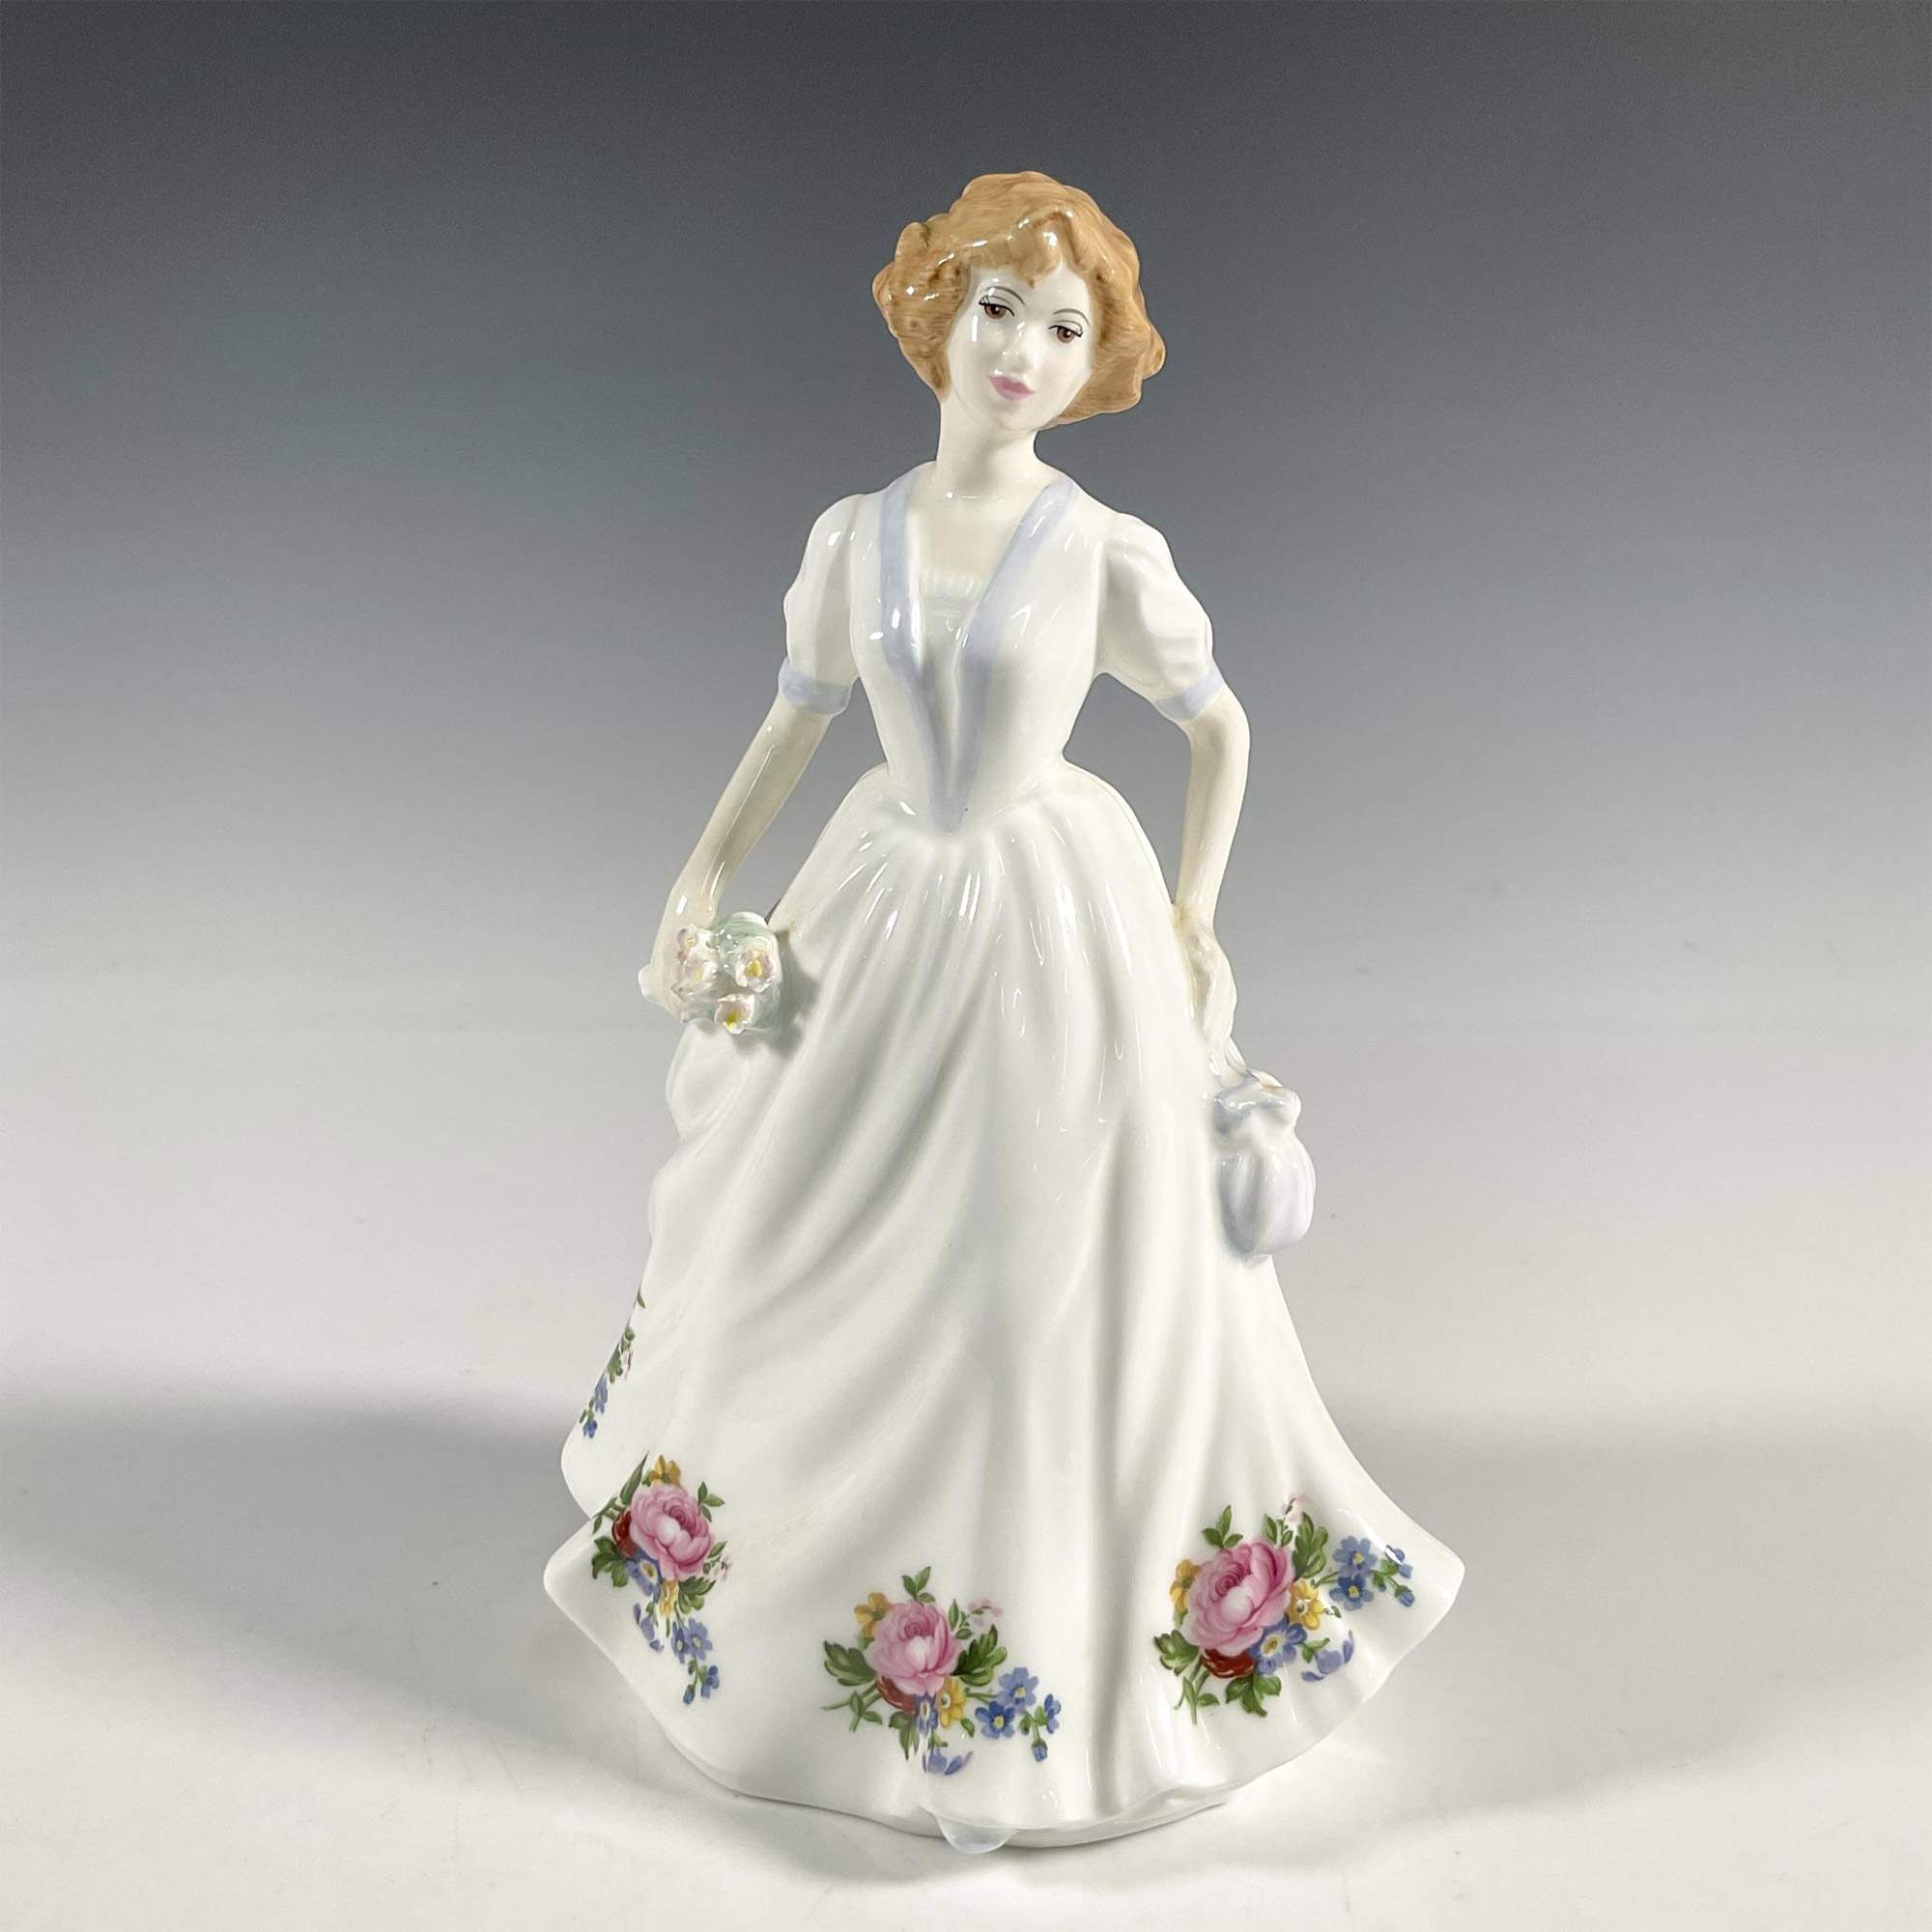 Louise HN3888 - Royal Doulton Figurine